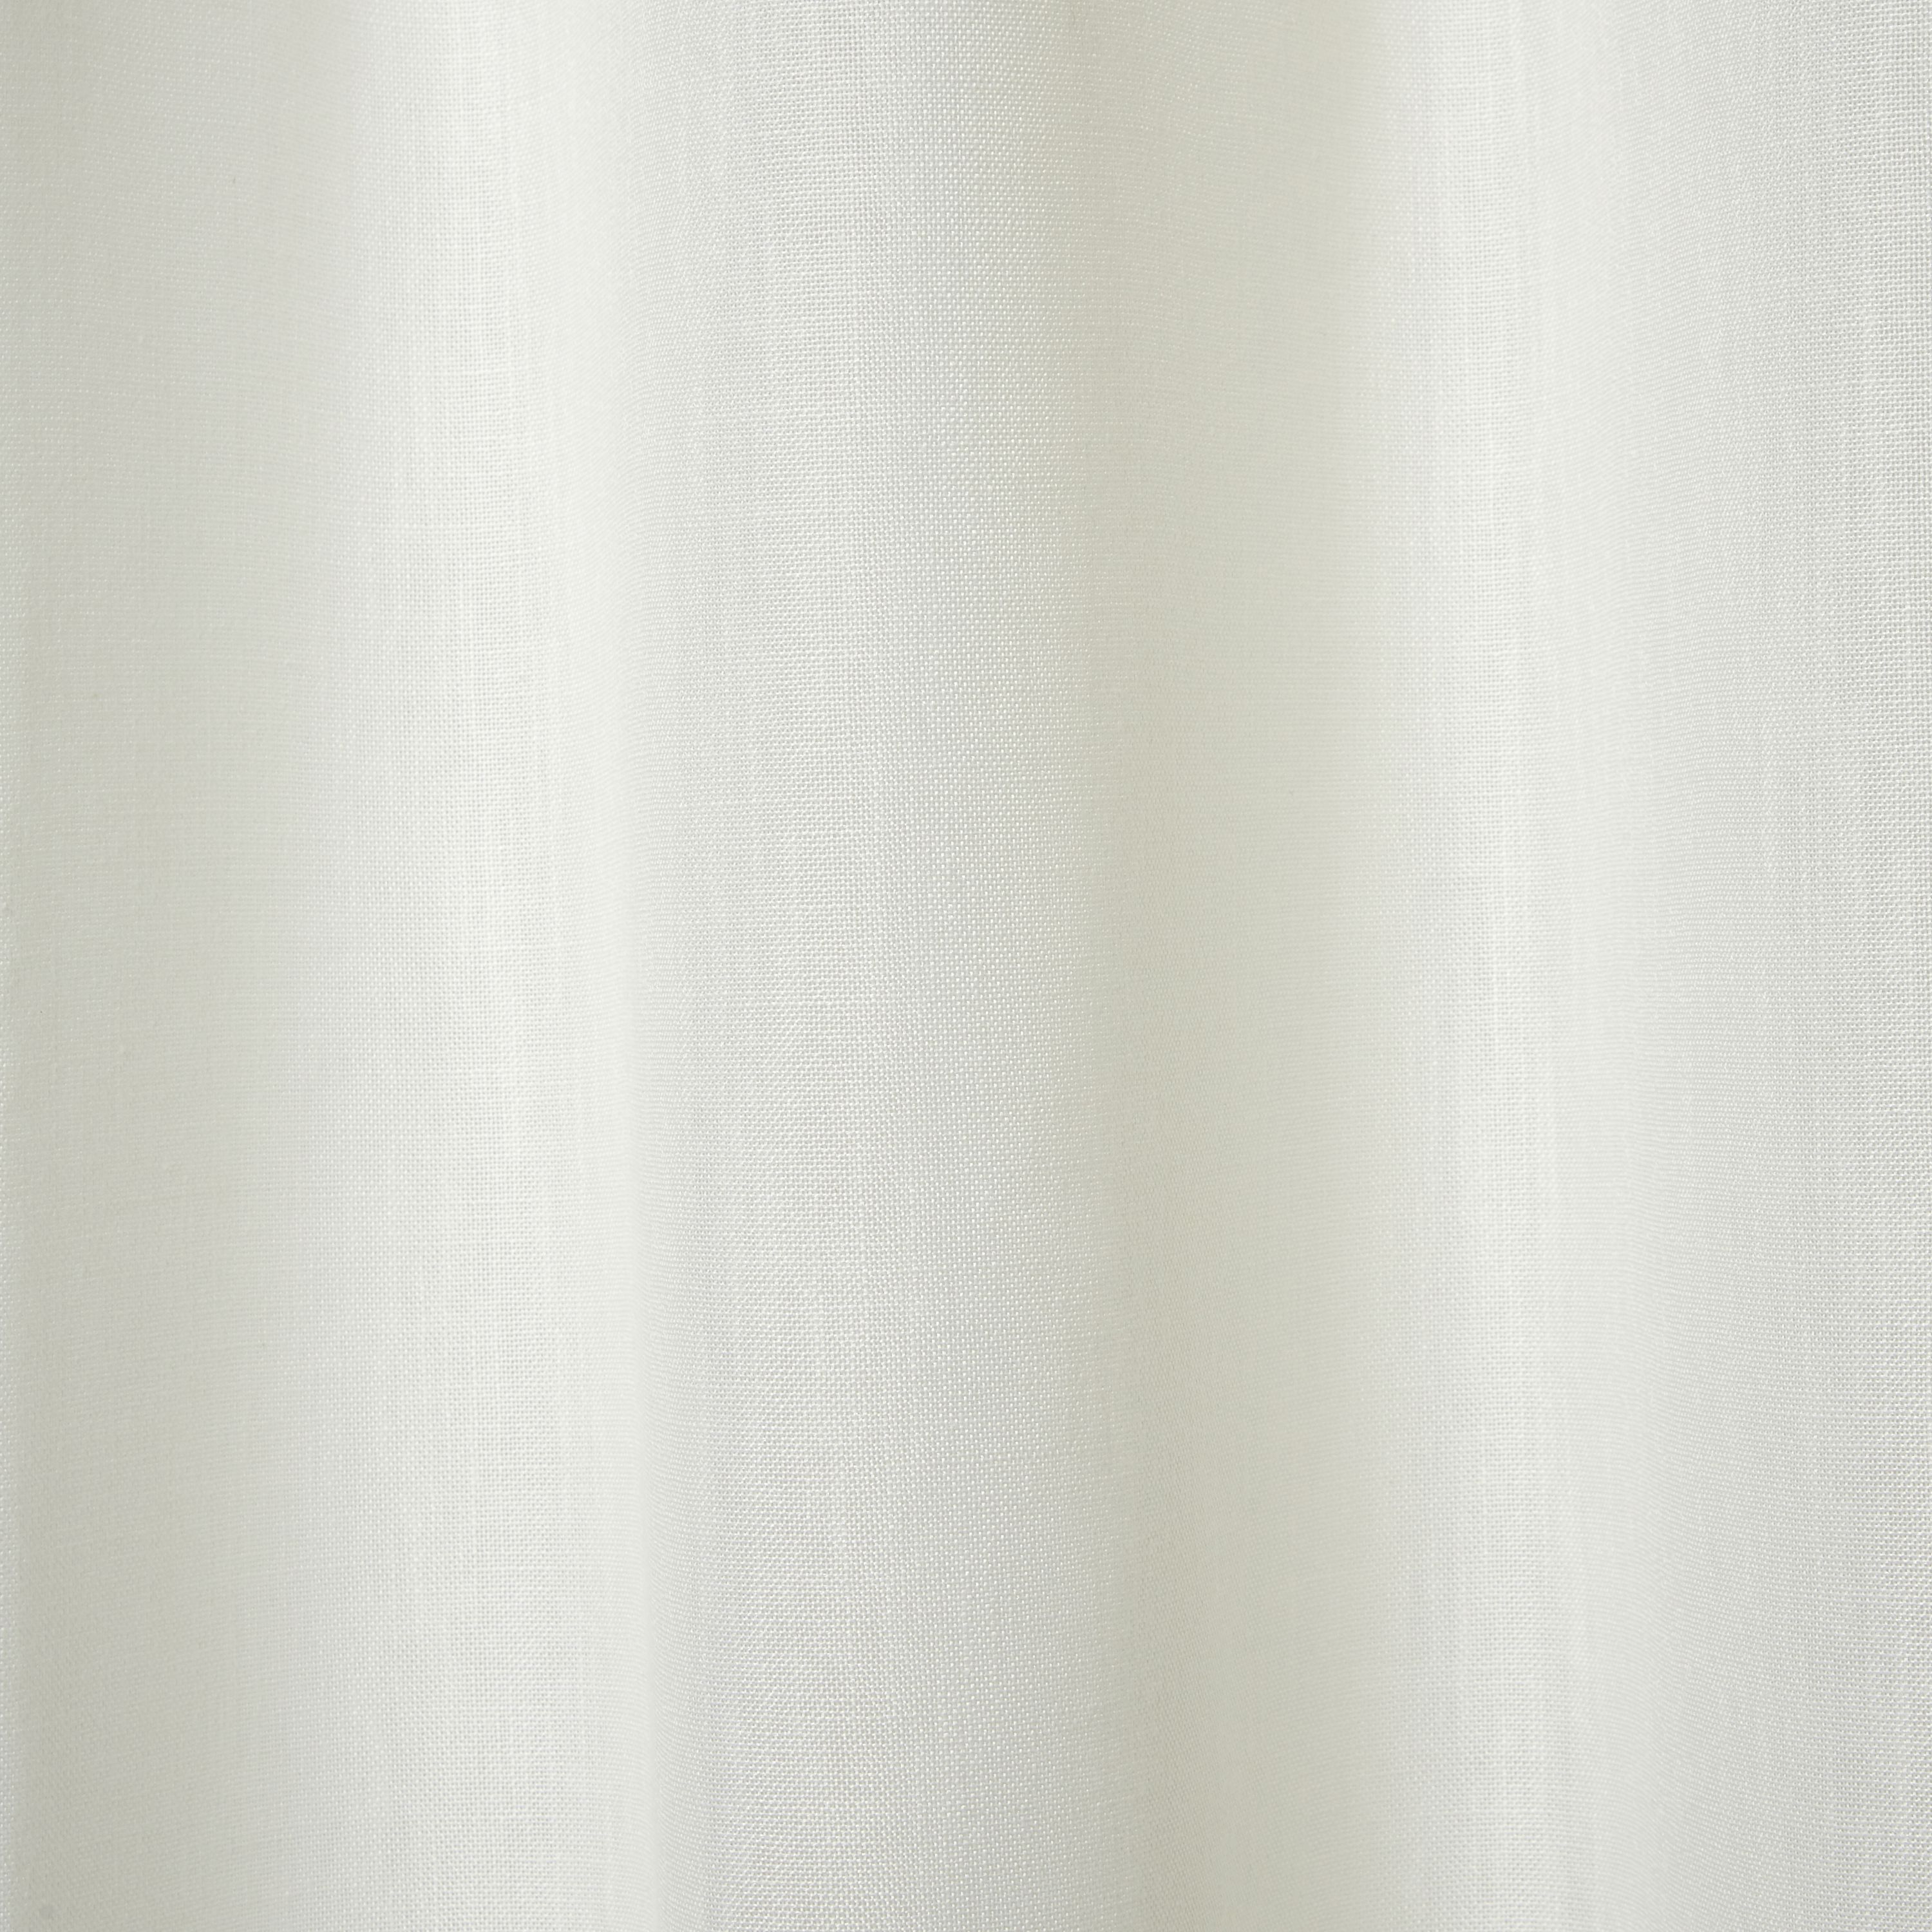 Kippens Off white Plain Net Eyelet Curtain (W)140cm (L)260cm, Single